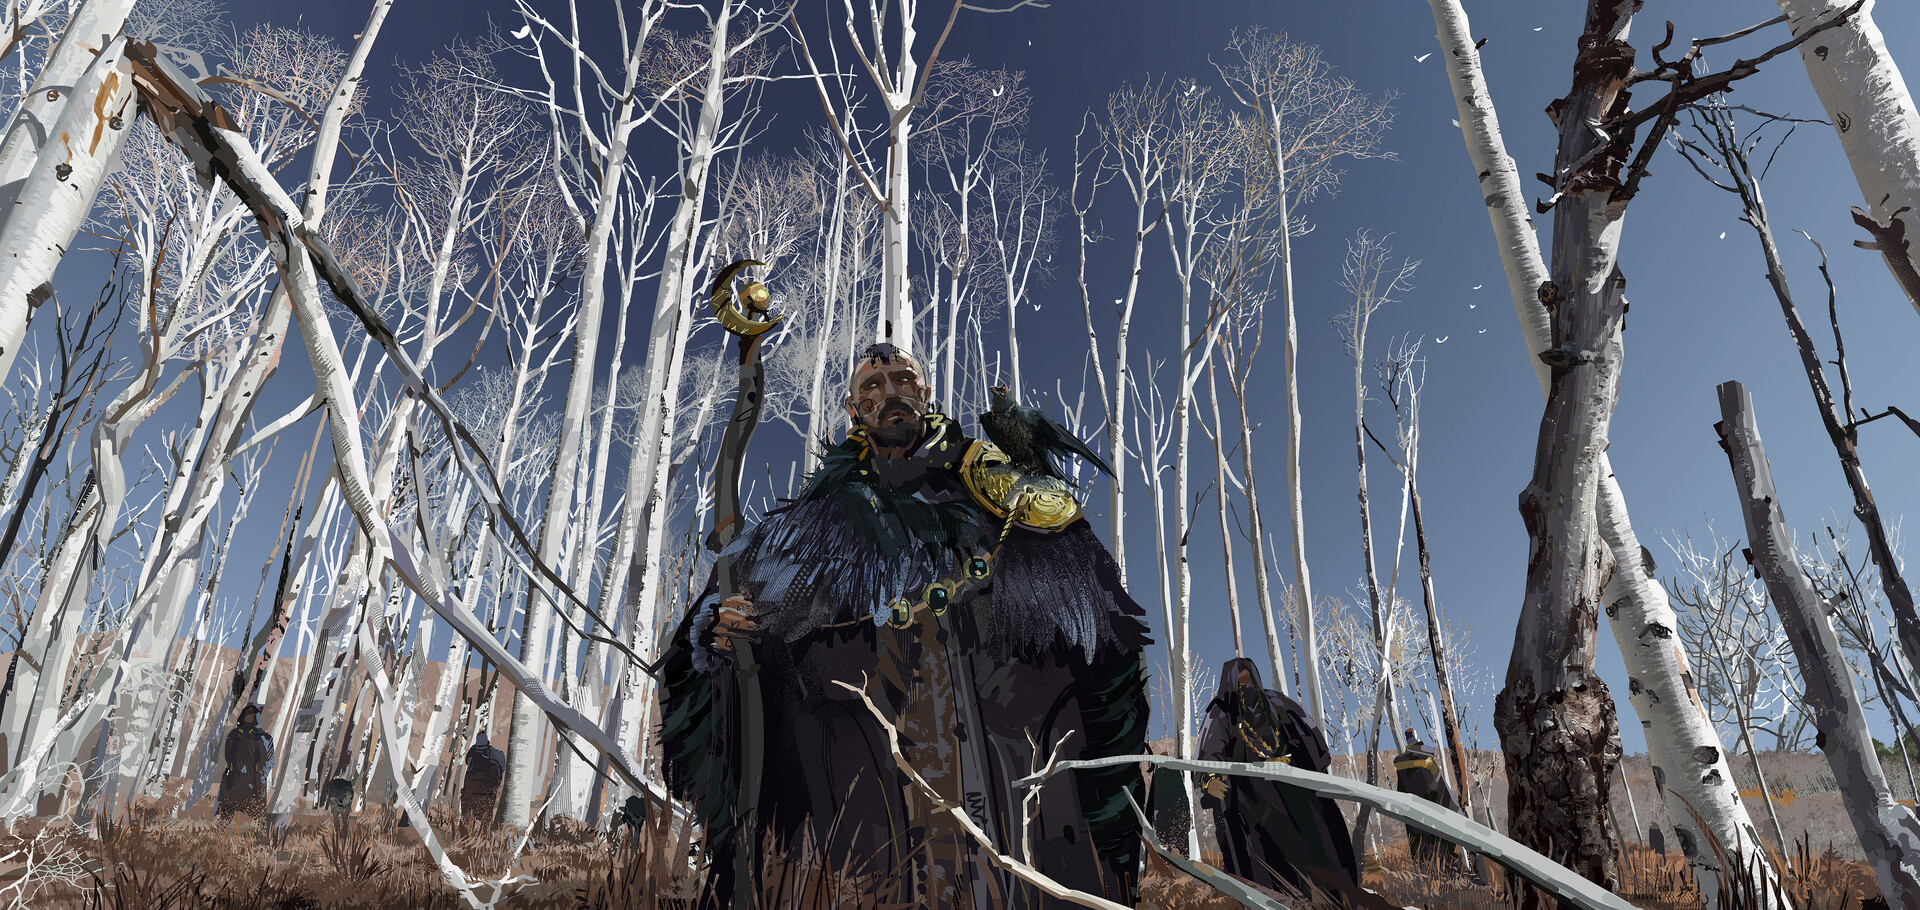 General 1920x910 Liang Mark digital art fantasy art trees birch forest staff crow druids crescent moon orb aspen trees